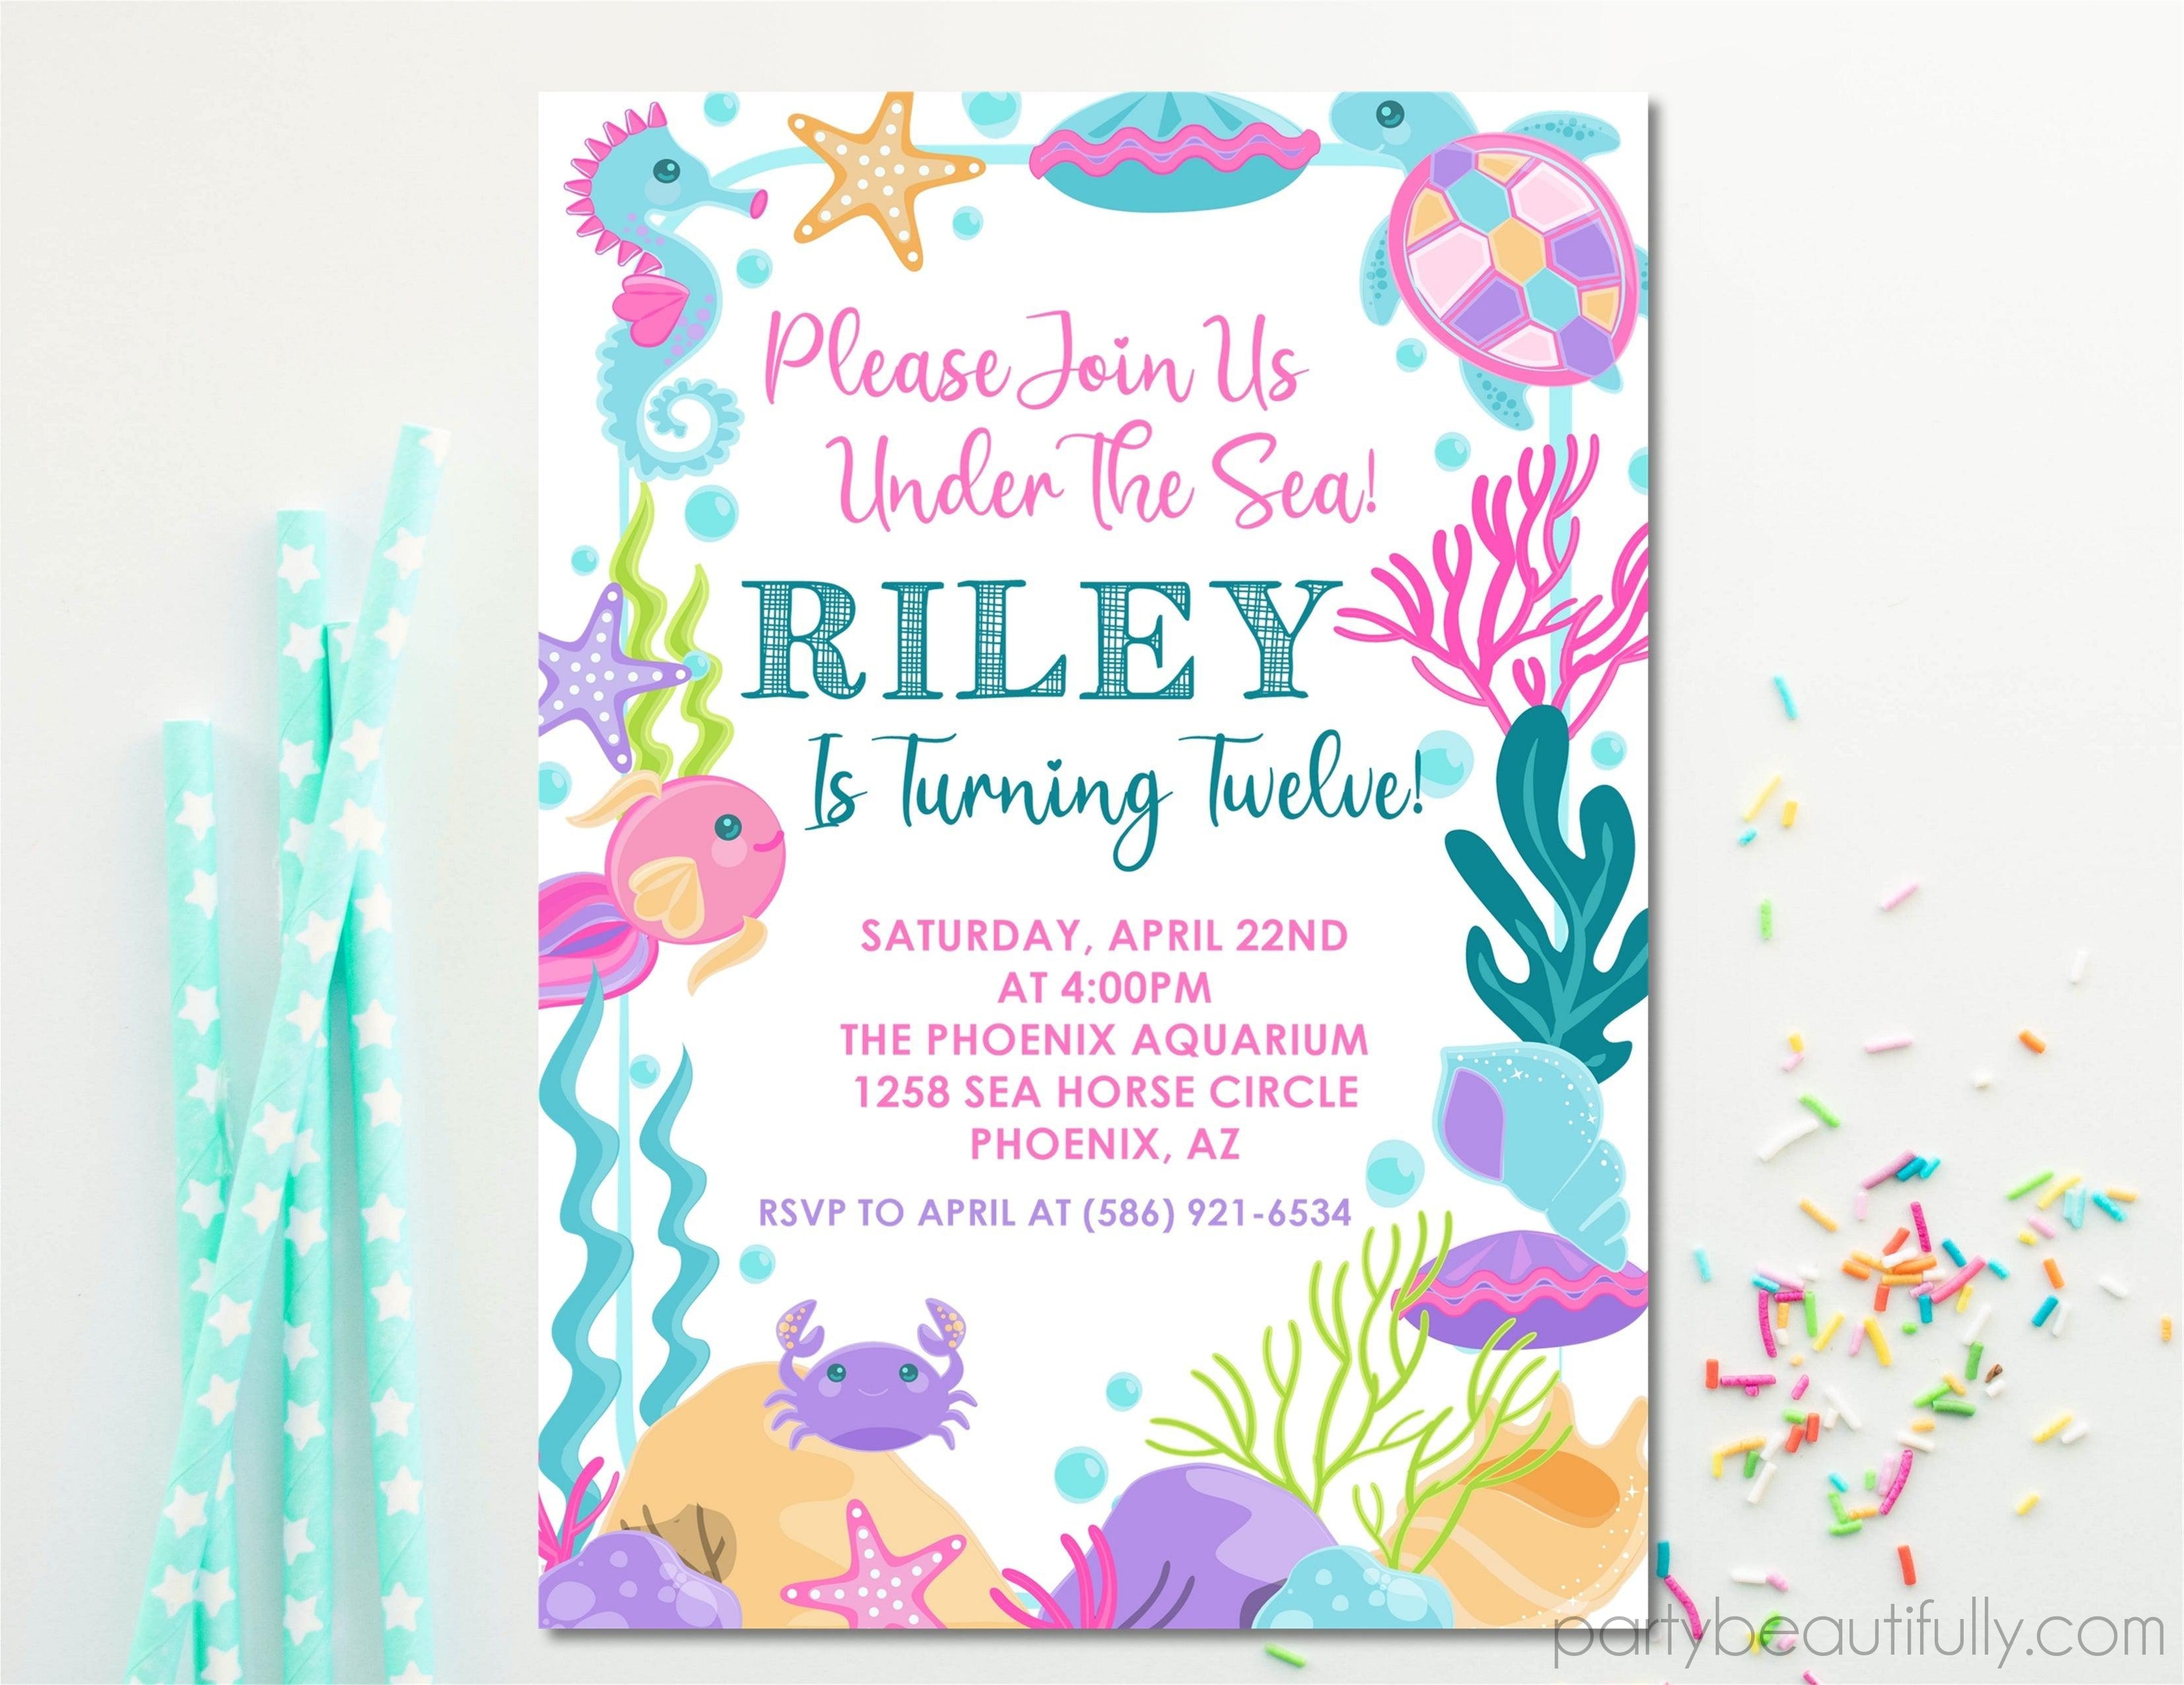 Under The Sea Birthday Party Invitations — Party Beautifully